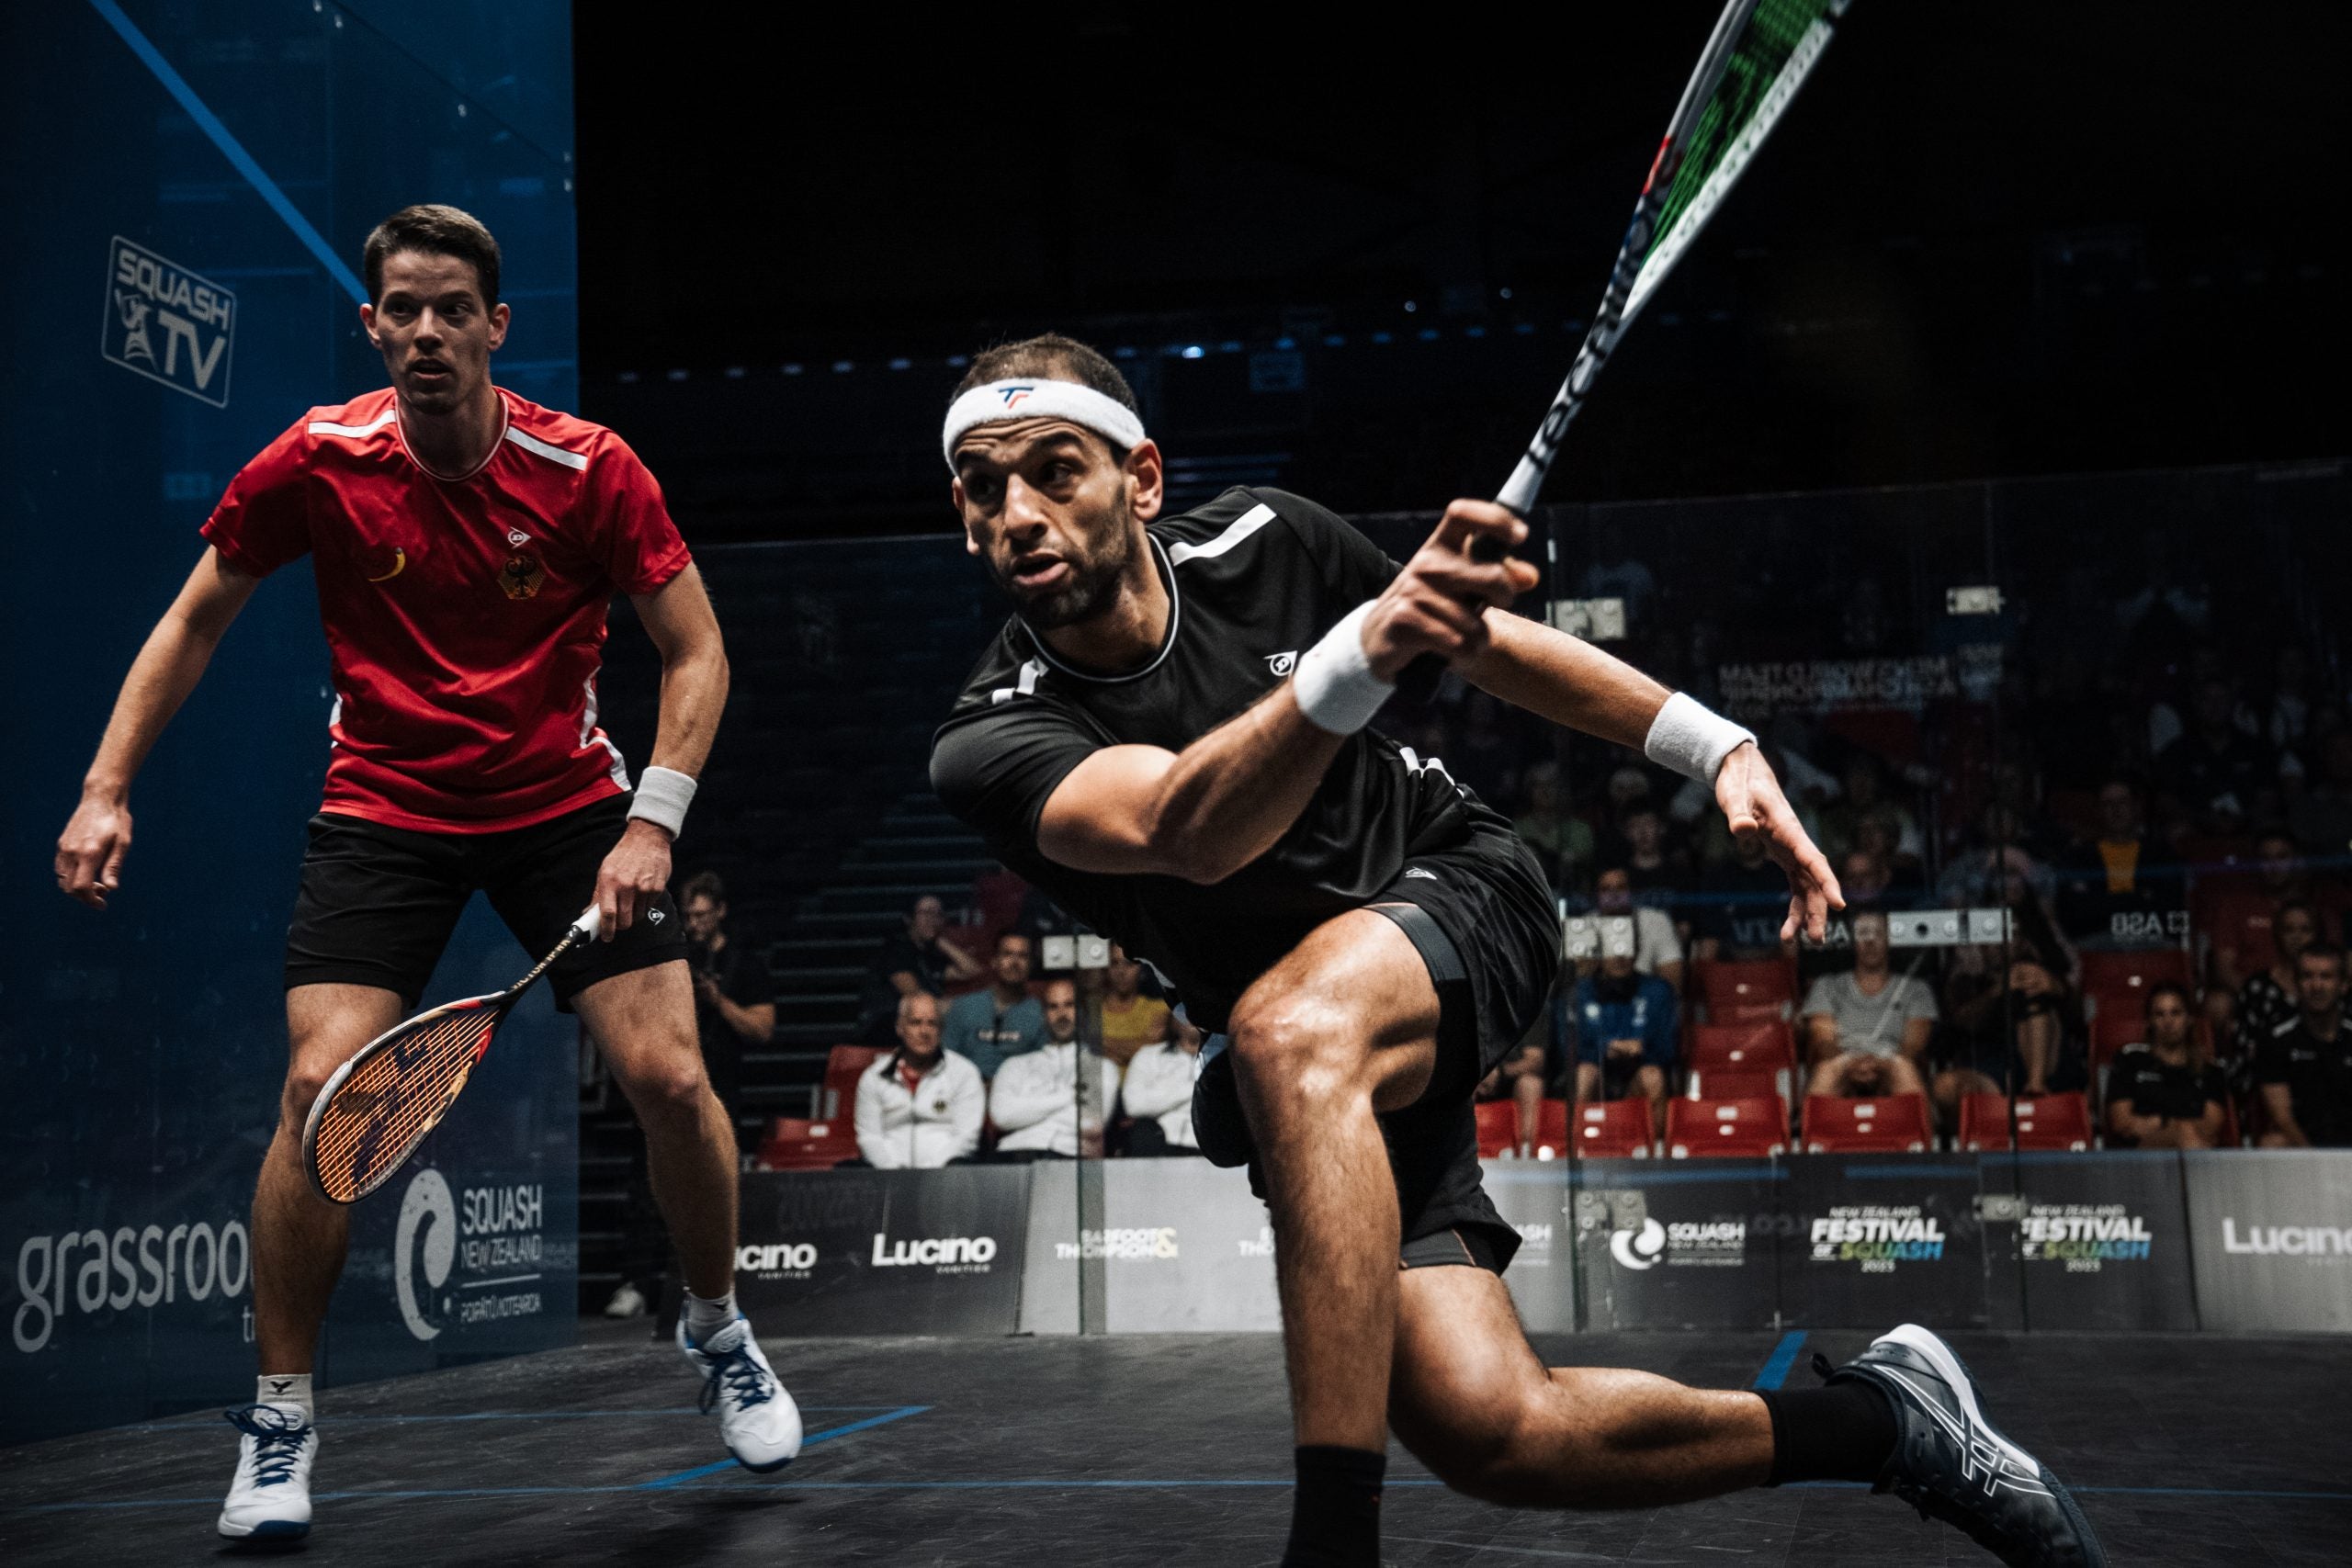 Mohamed ElShorbagy in action on the squash court